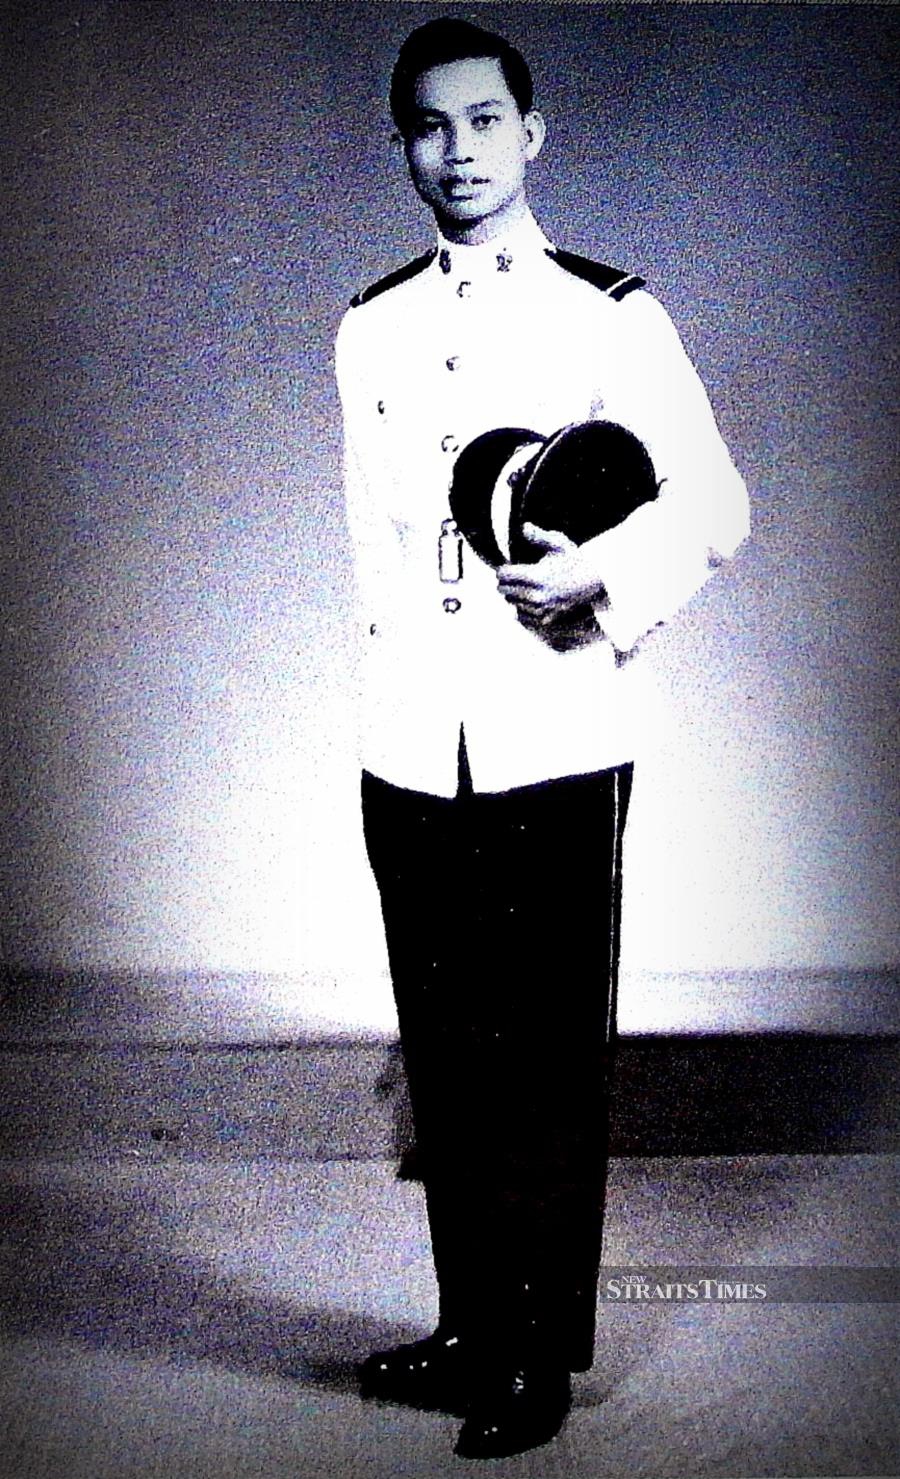  Officer Cadet Lee, Dec 13, 1958.